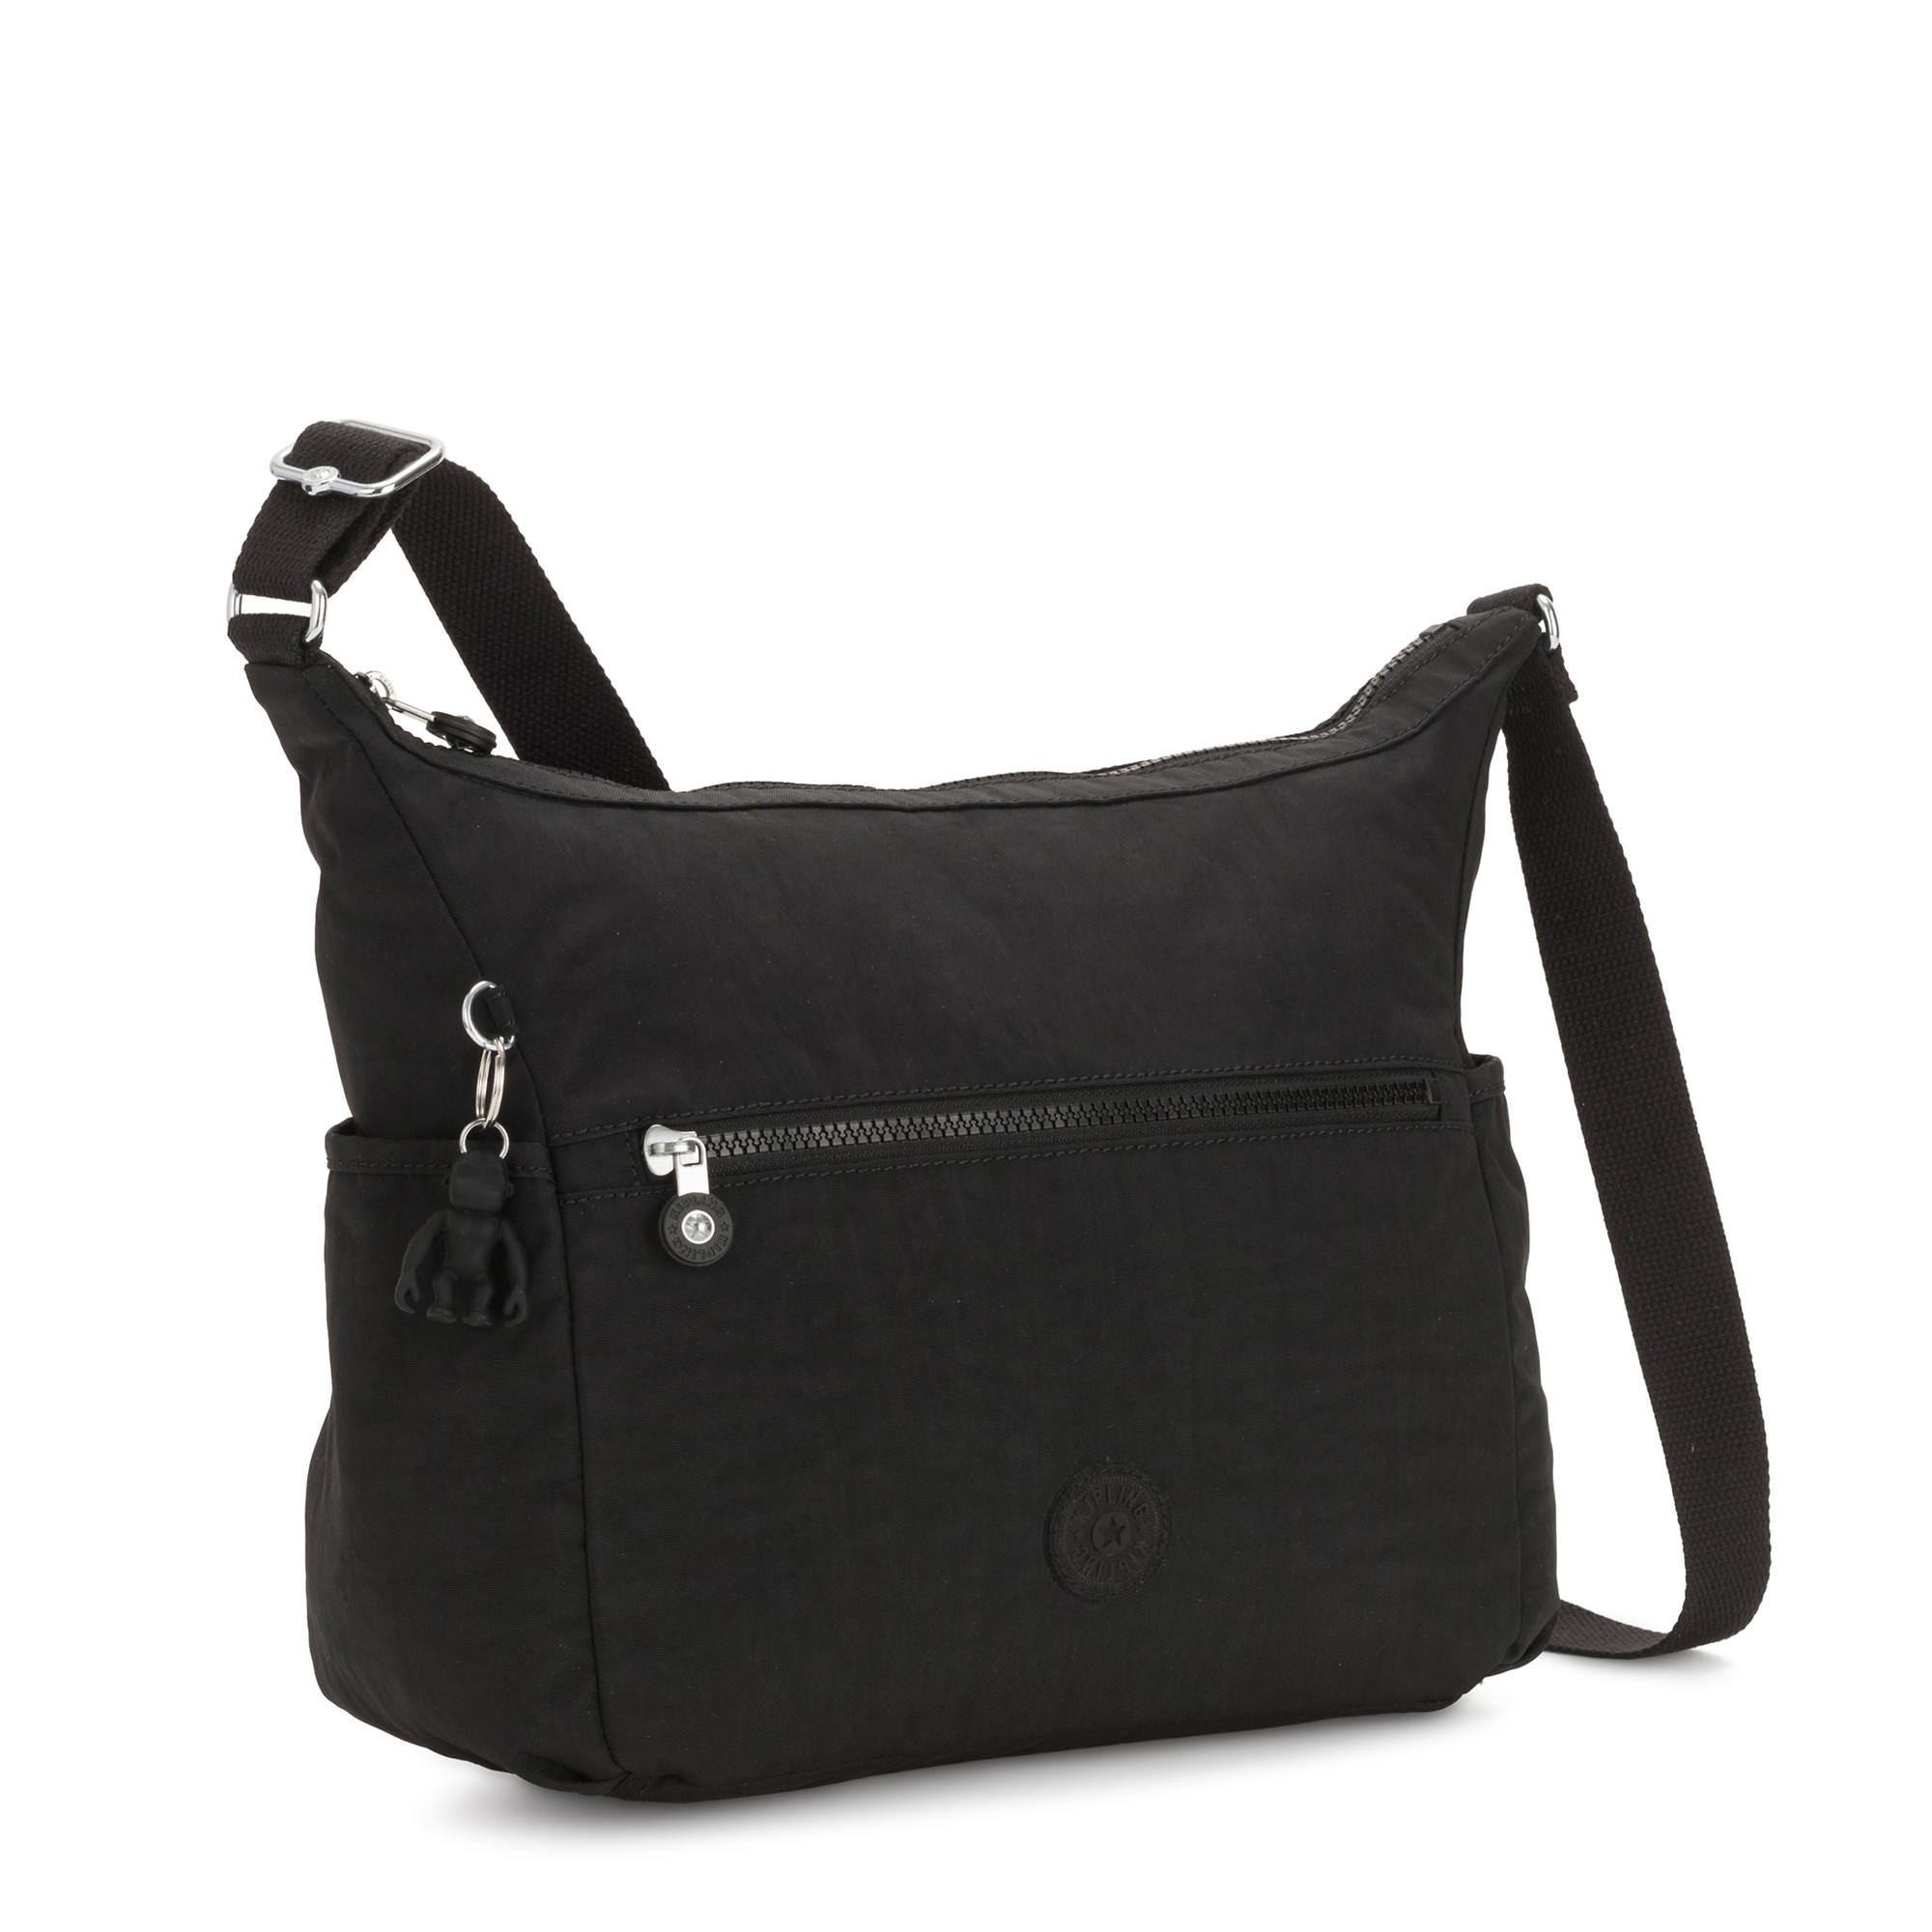 Kipling Alenya Crossbody Bag | eBay